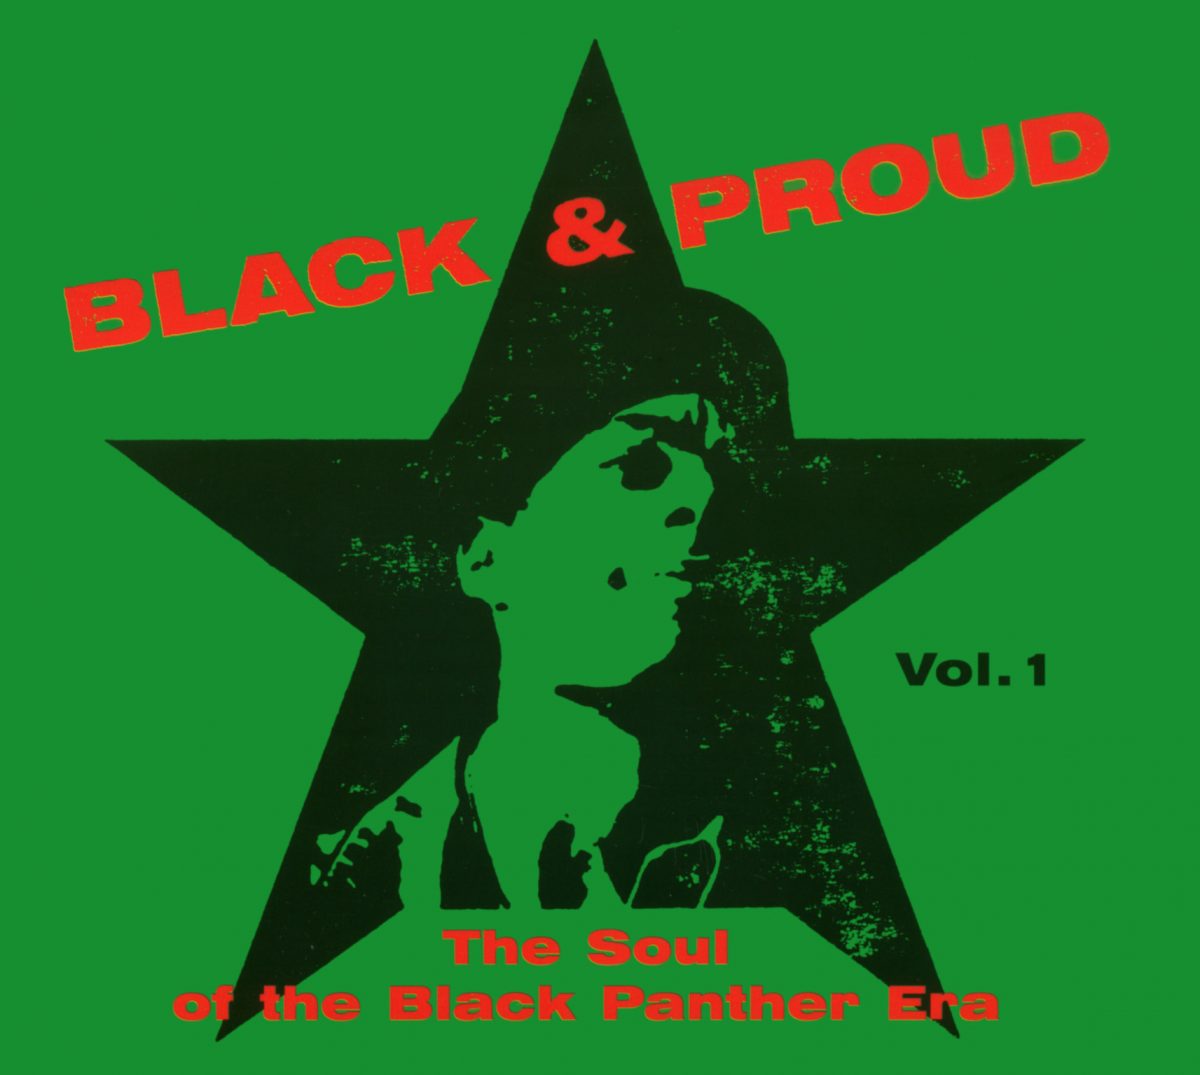 Black & Proud Vol. I - The Soul Of the Black Panther Era